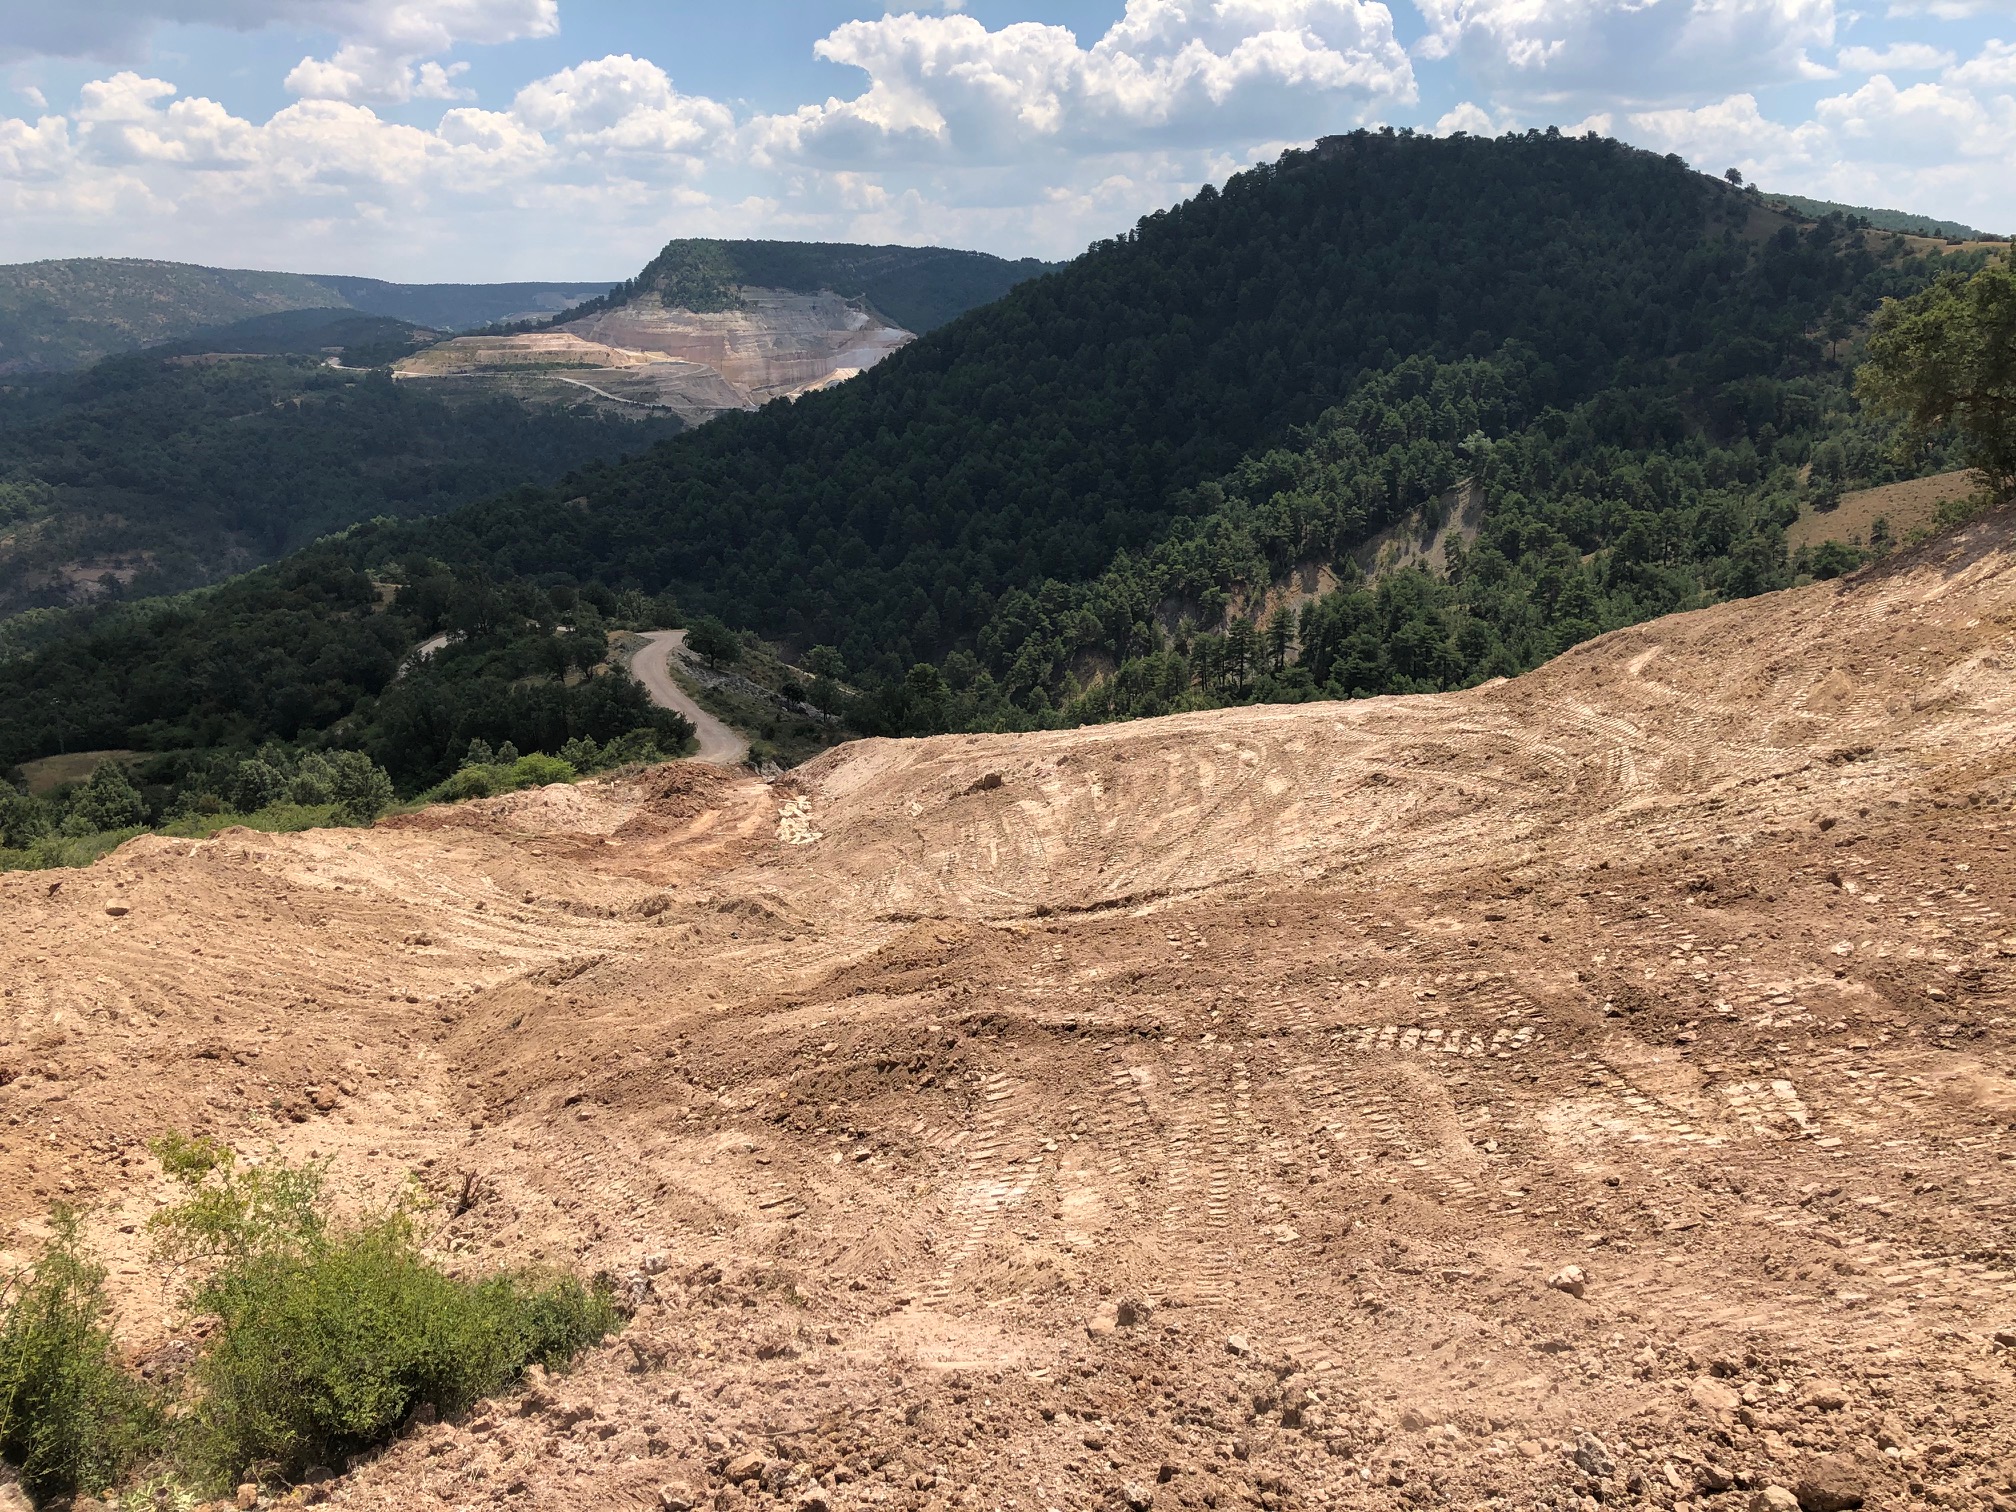 Starting the restoration works at the Santa Engracia mine (Peñalén) – july 2020